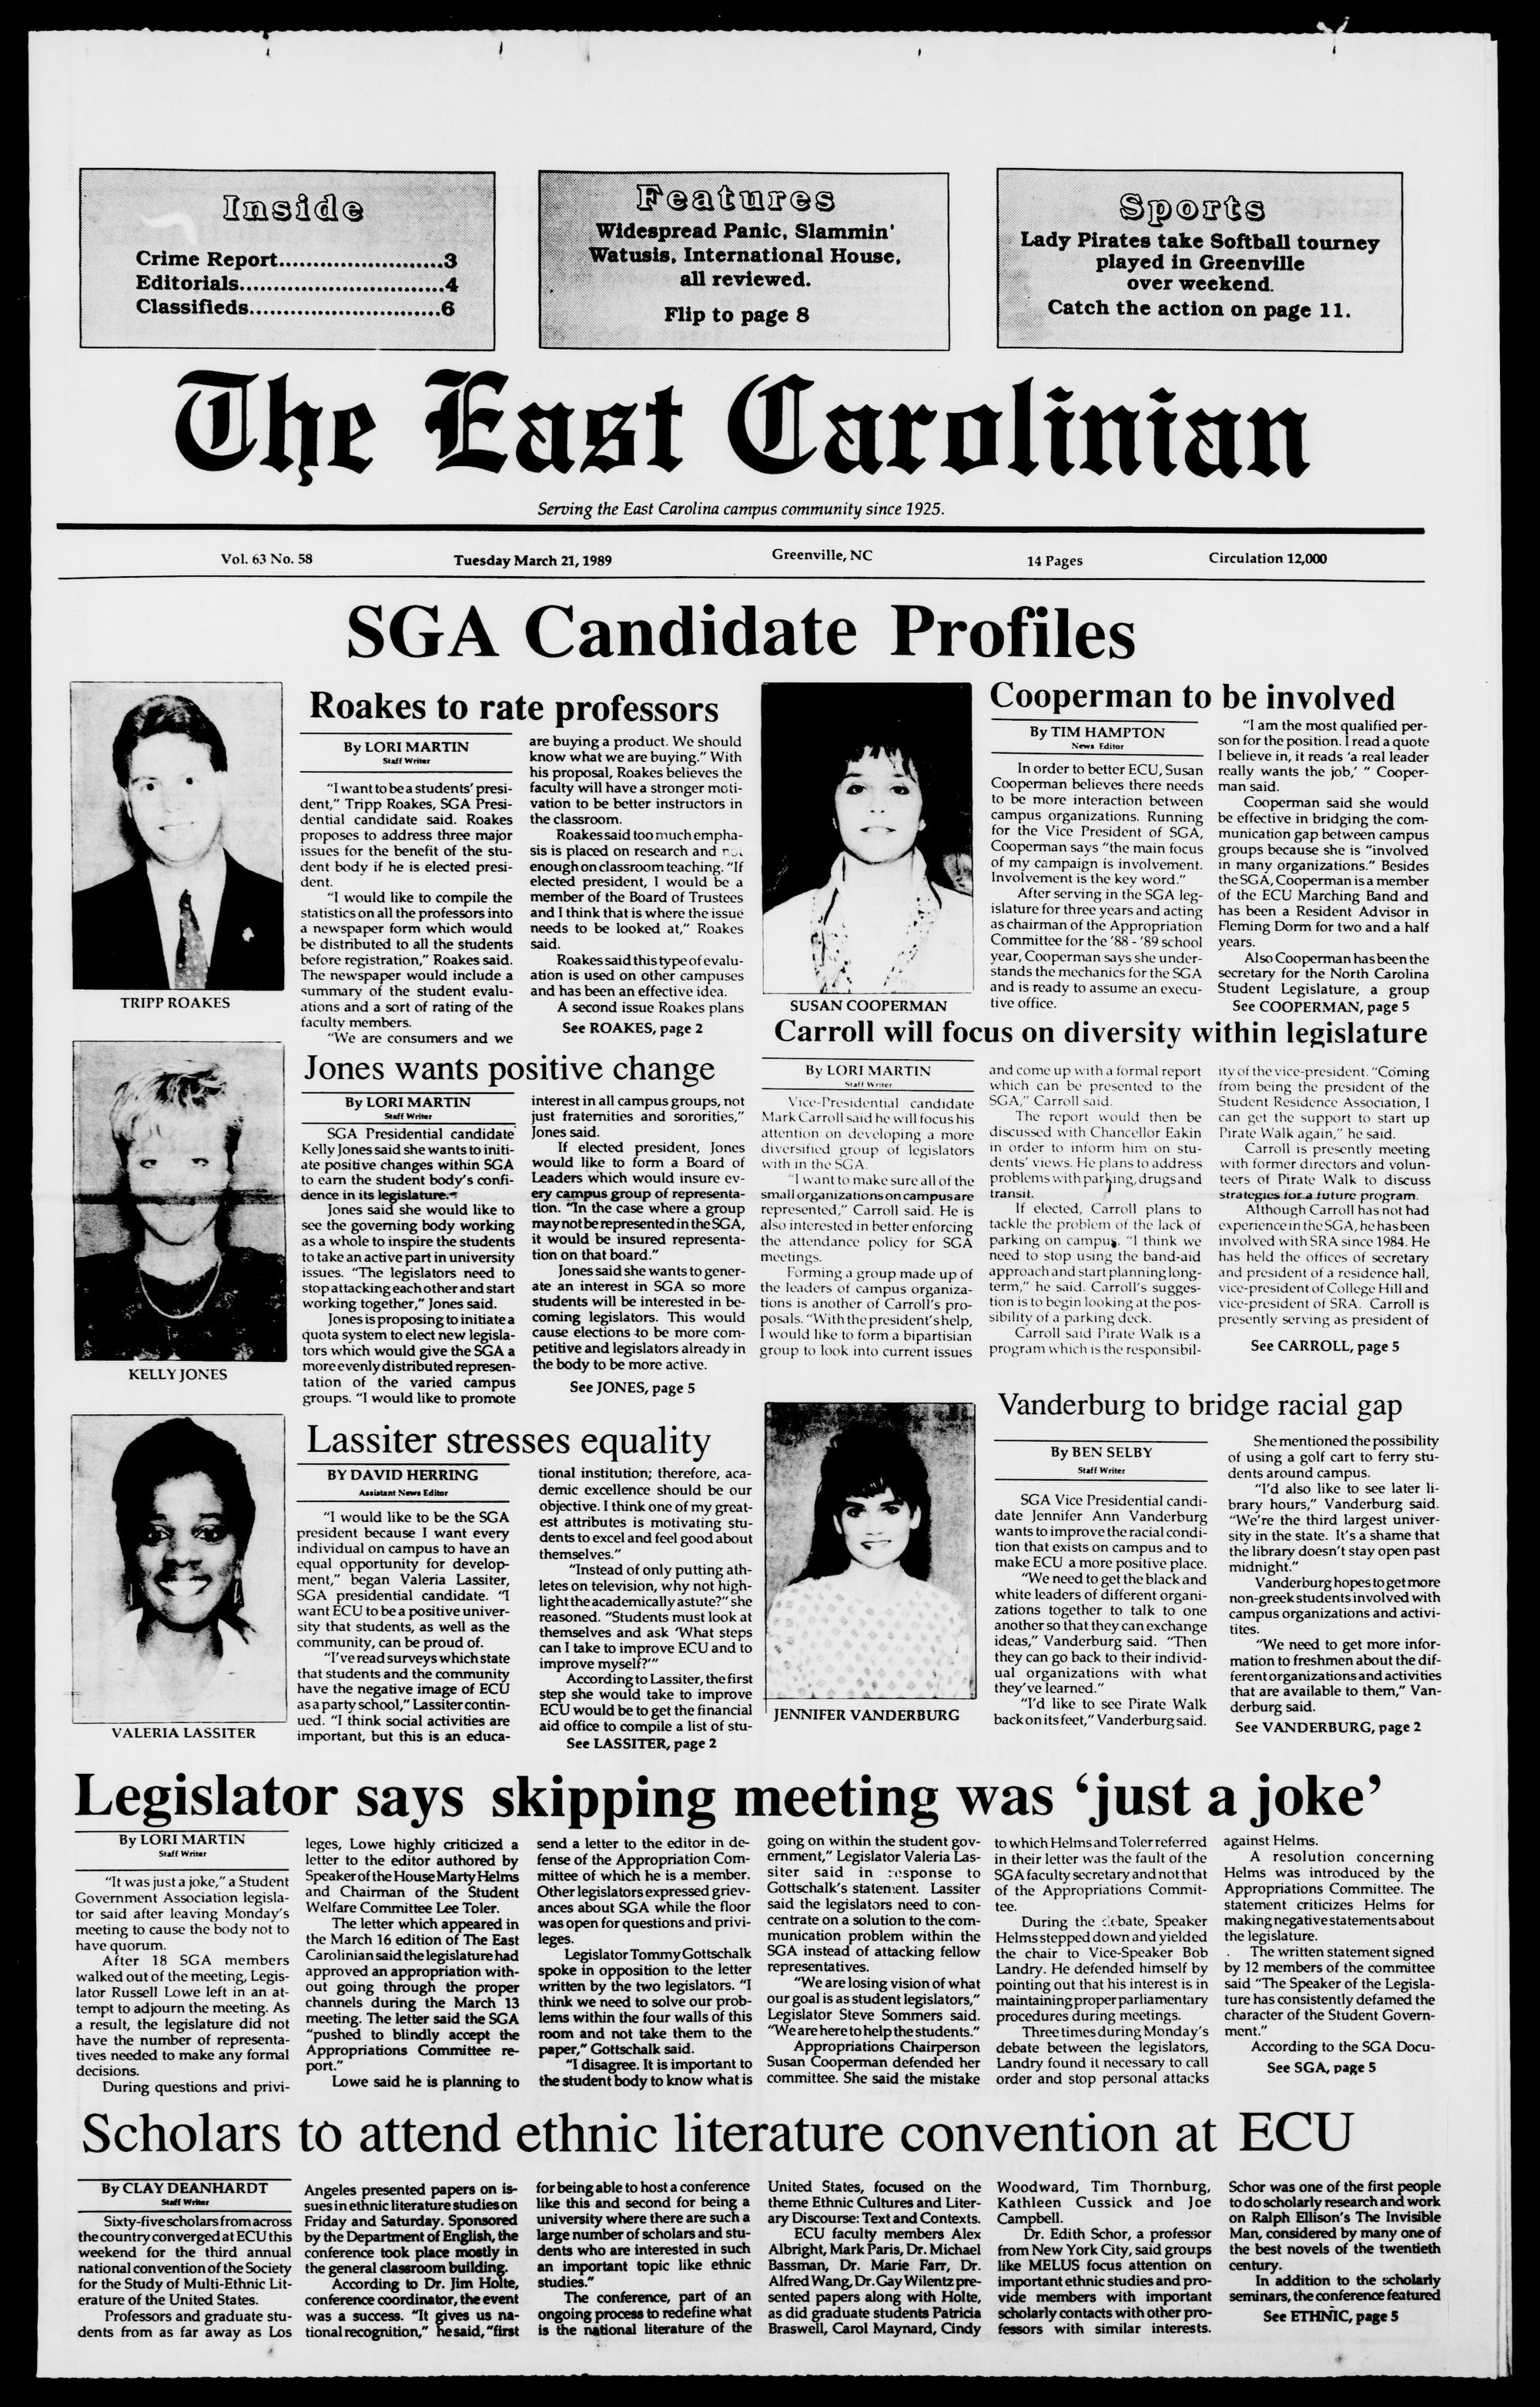 The East Carolinian, March 21, 1989